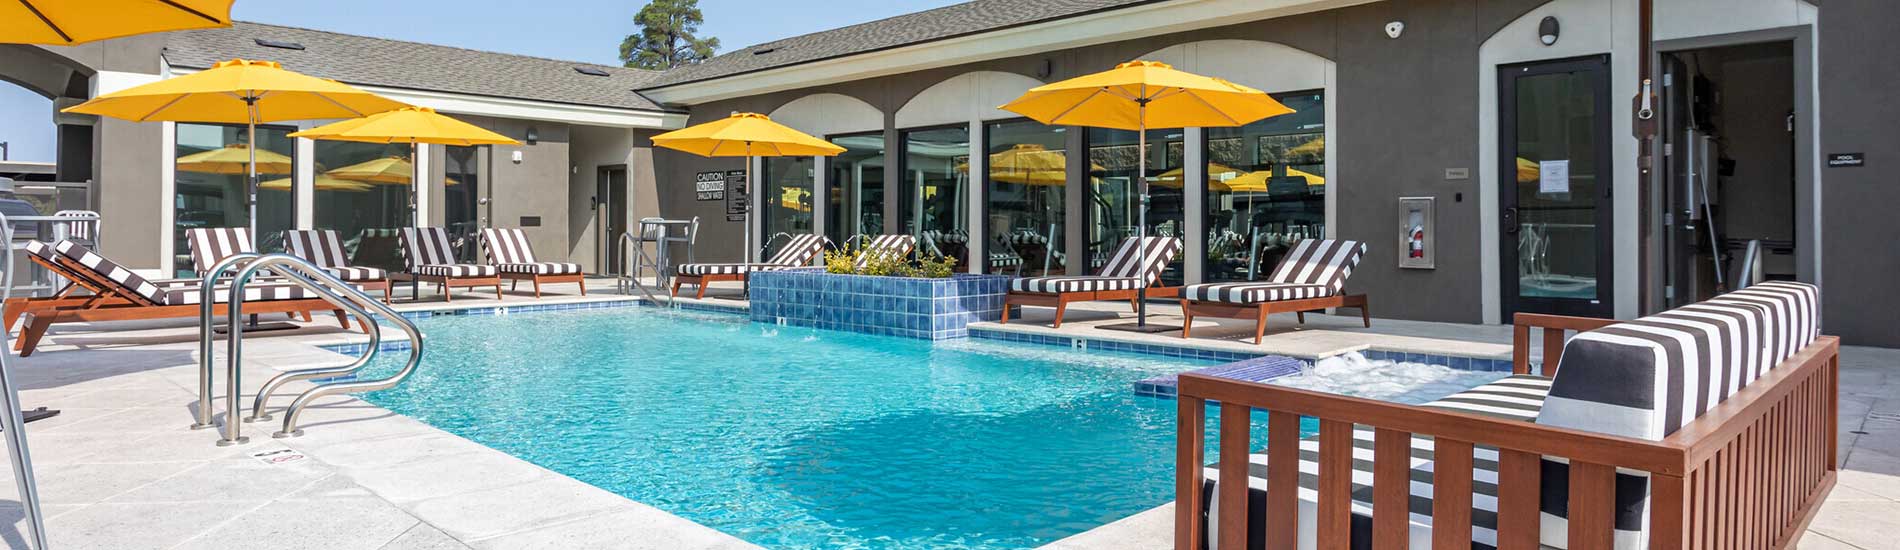 Resort-Style Swimming Pool & Spa